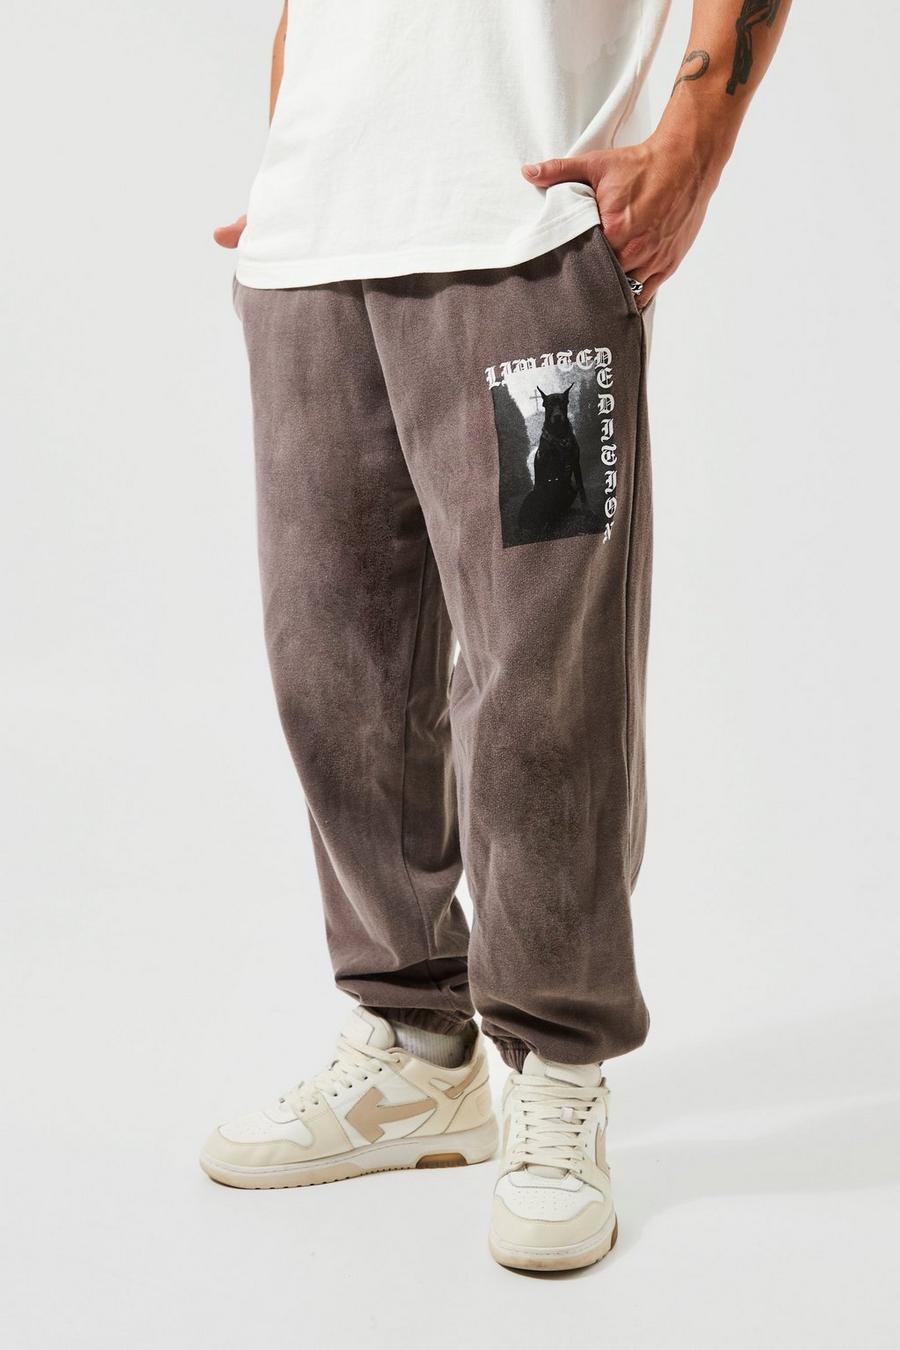 Pantalón deportivo oversize con estampado Limited de dóberman, Chocolate marrón